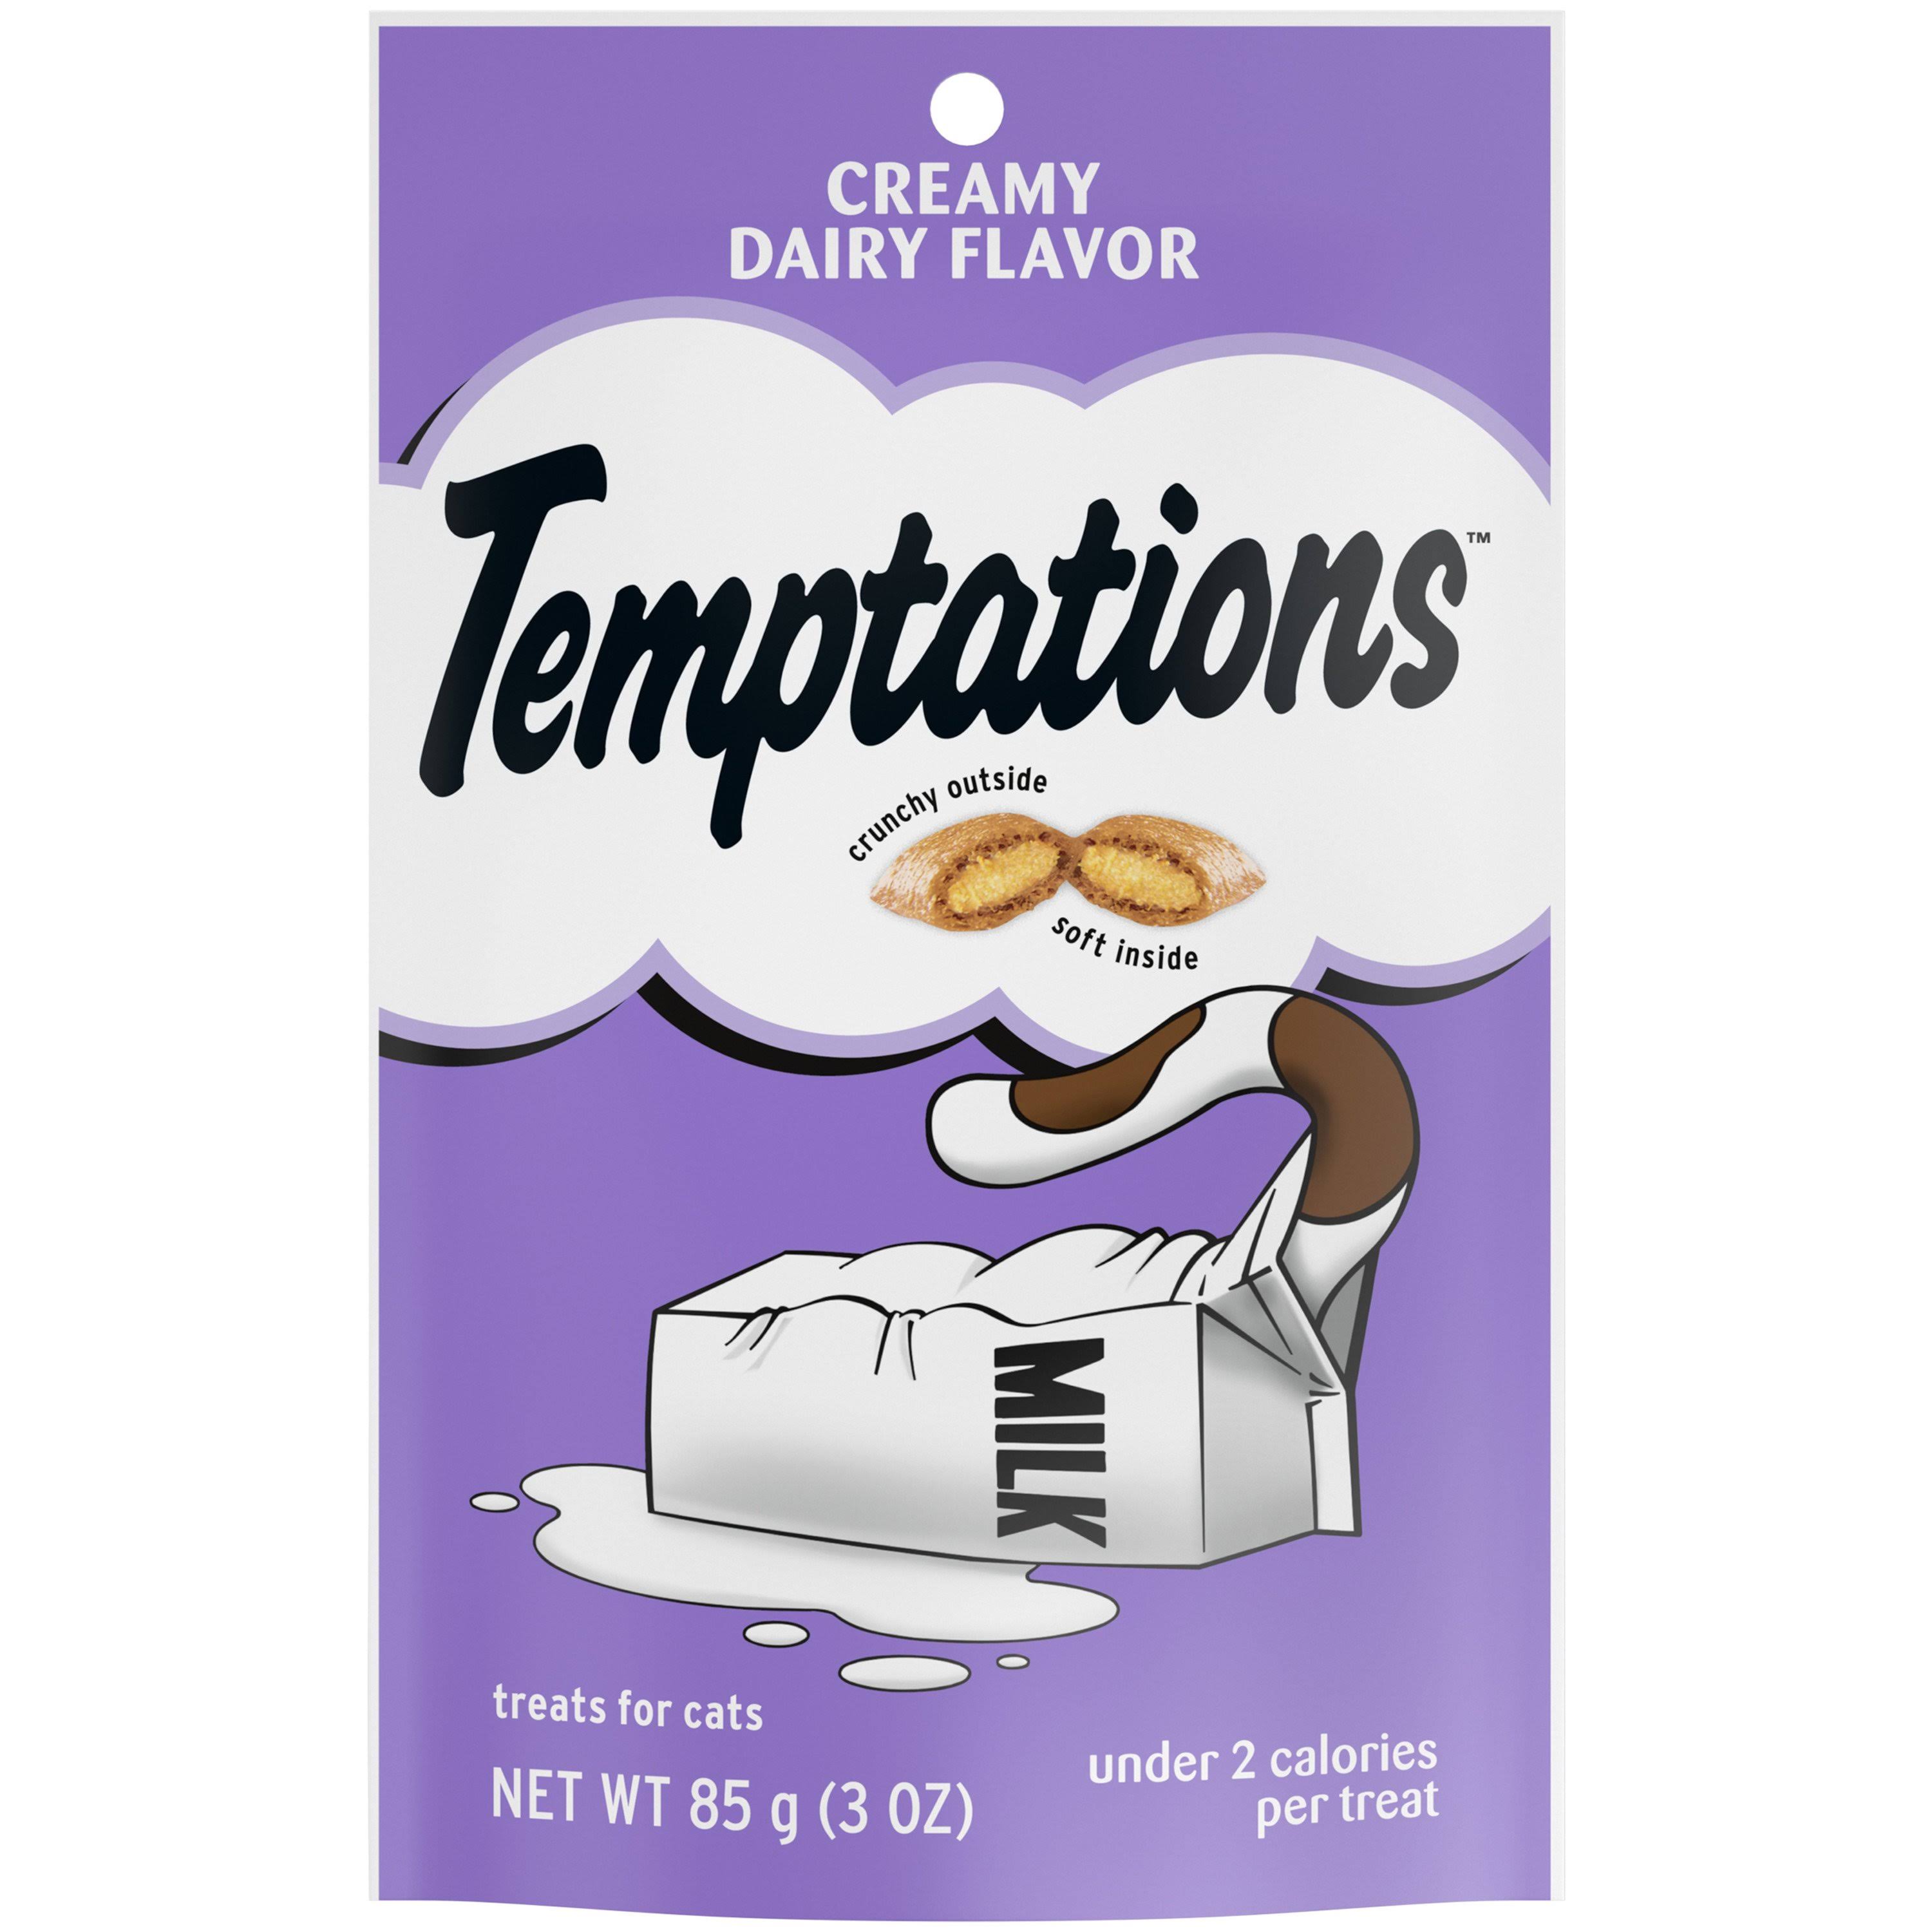 Whiskas Temptations Cat Treats - Creamy Dairy Flavor, 3oz